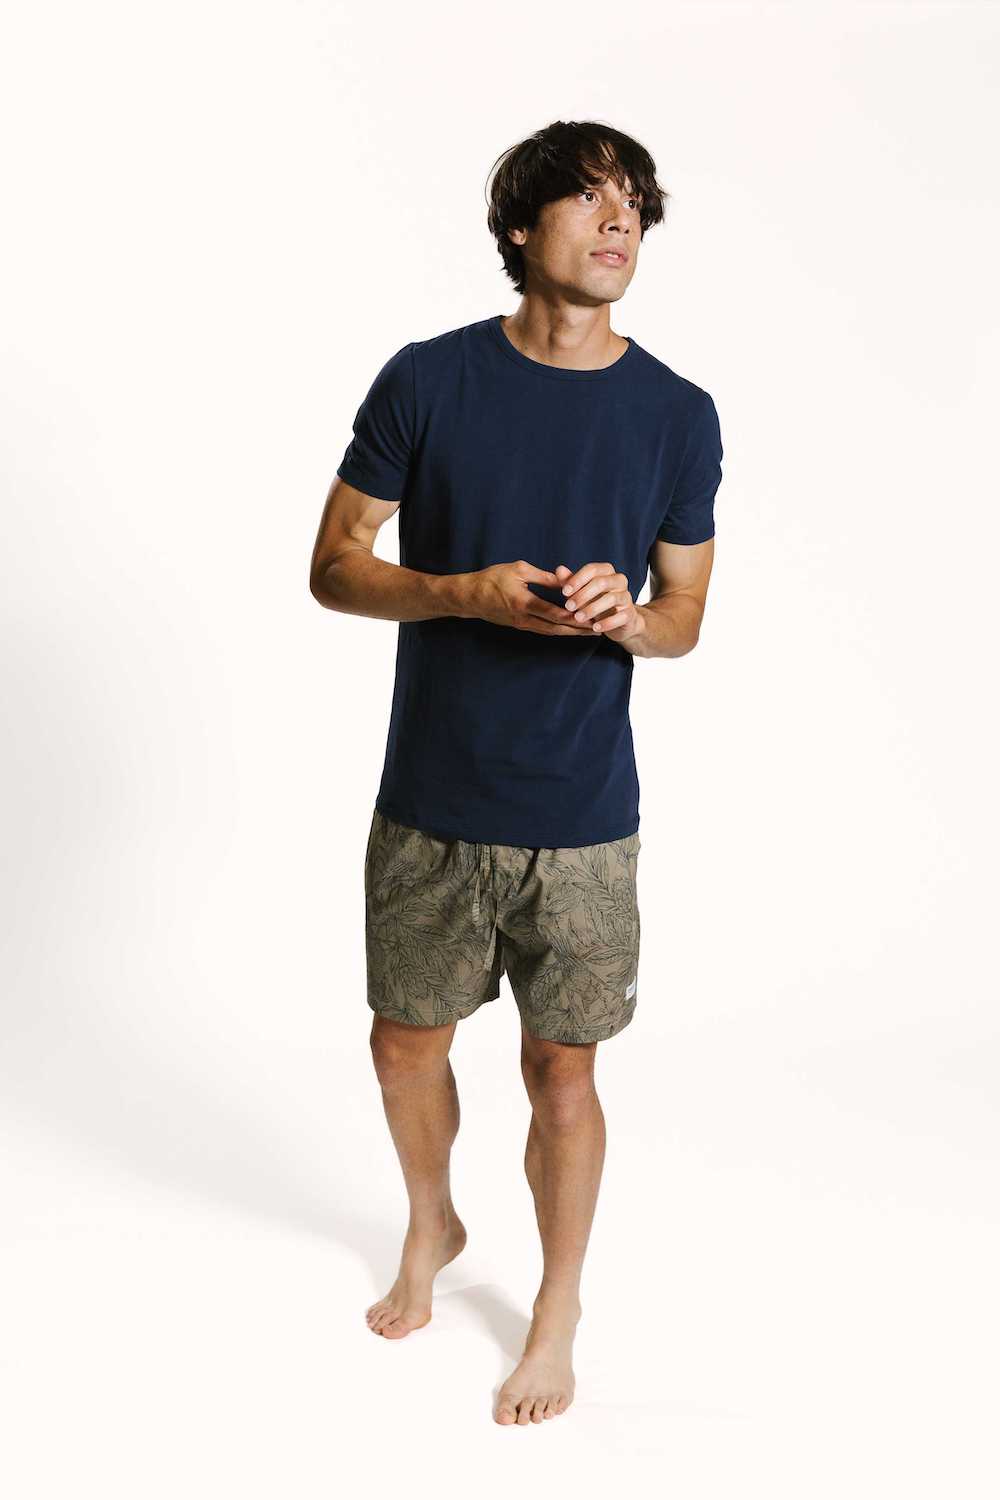 Mens sleepwear shorts in line print paired with dark navy t-shirt